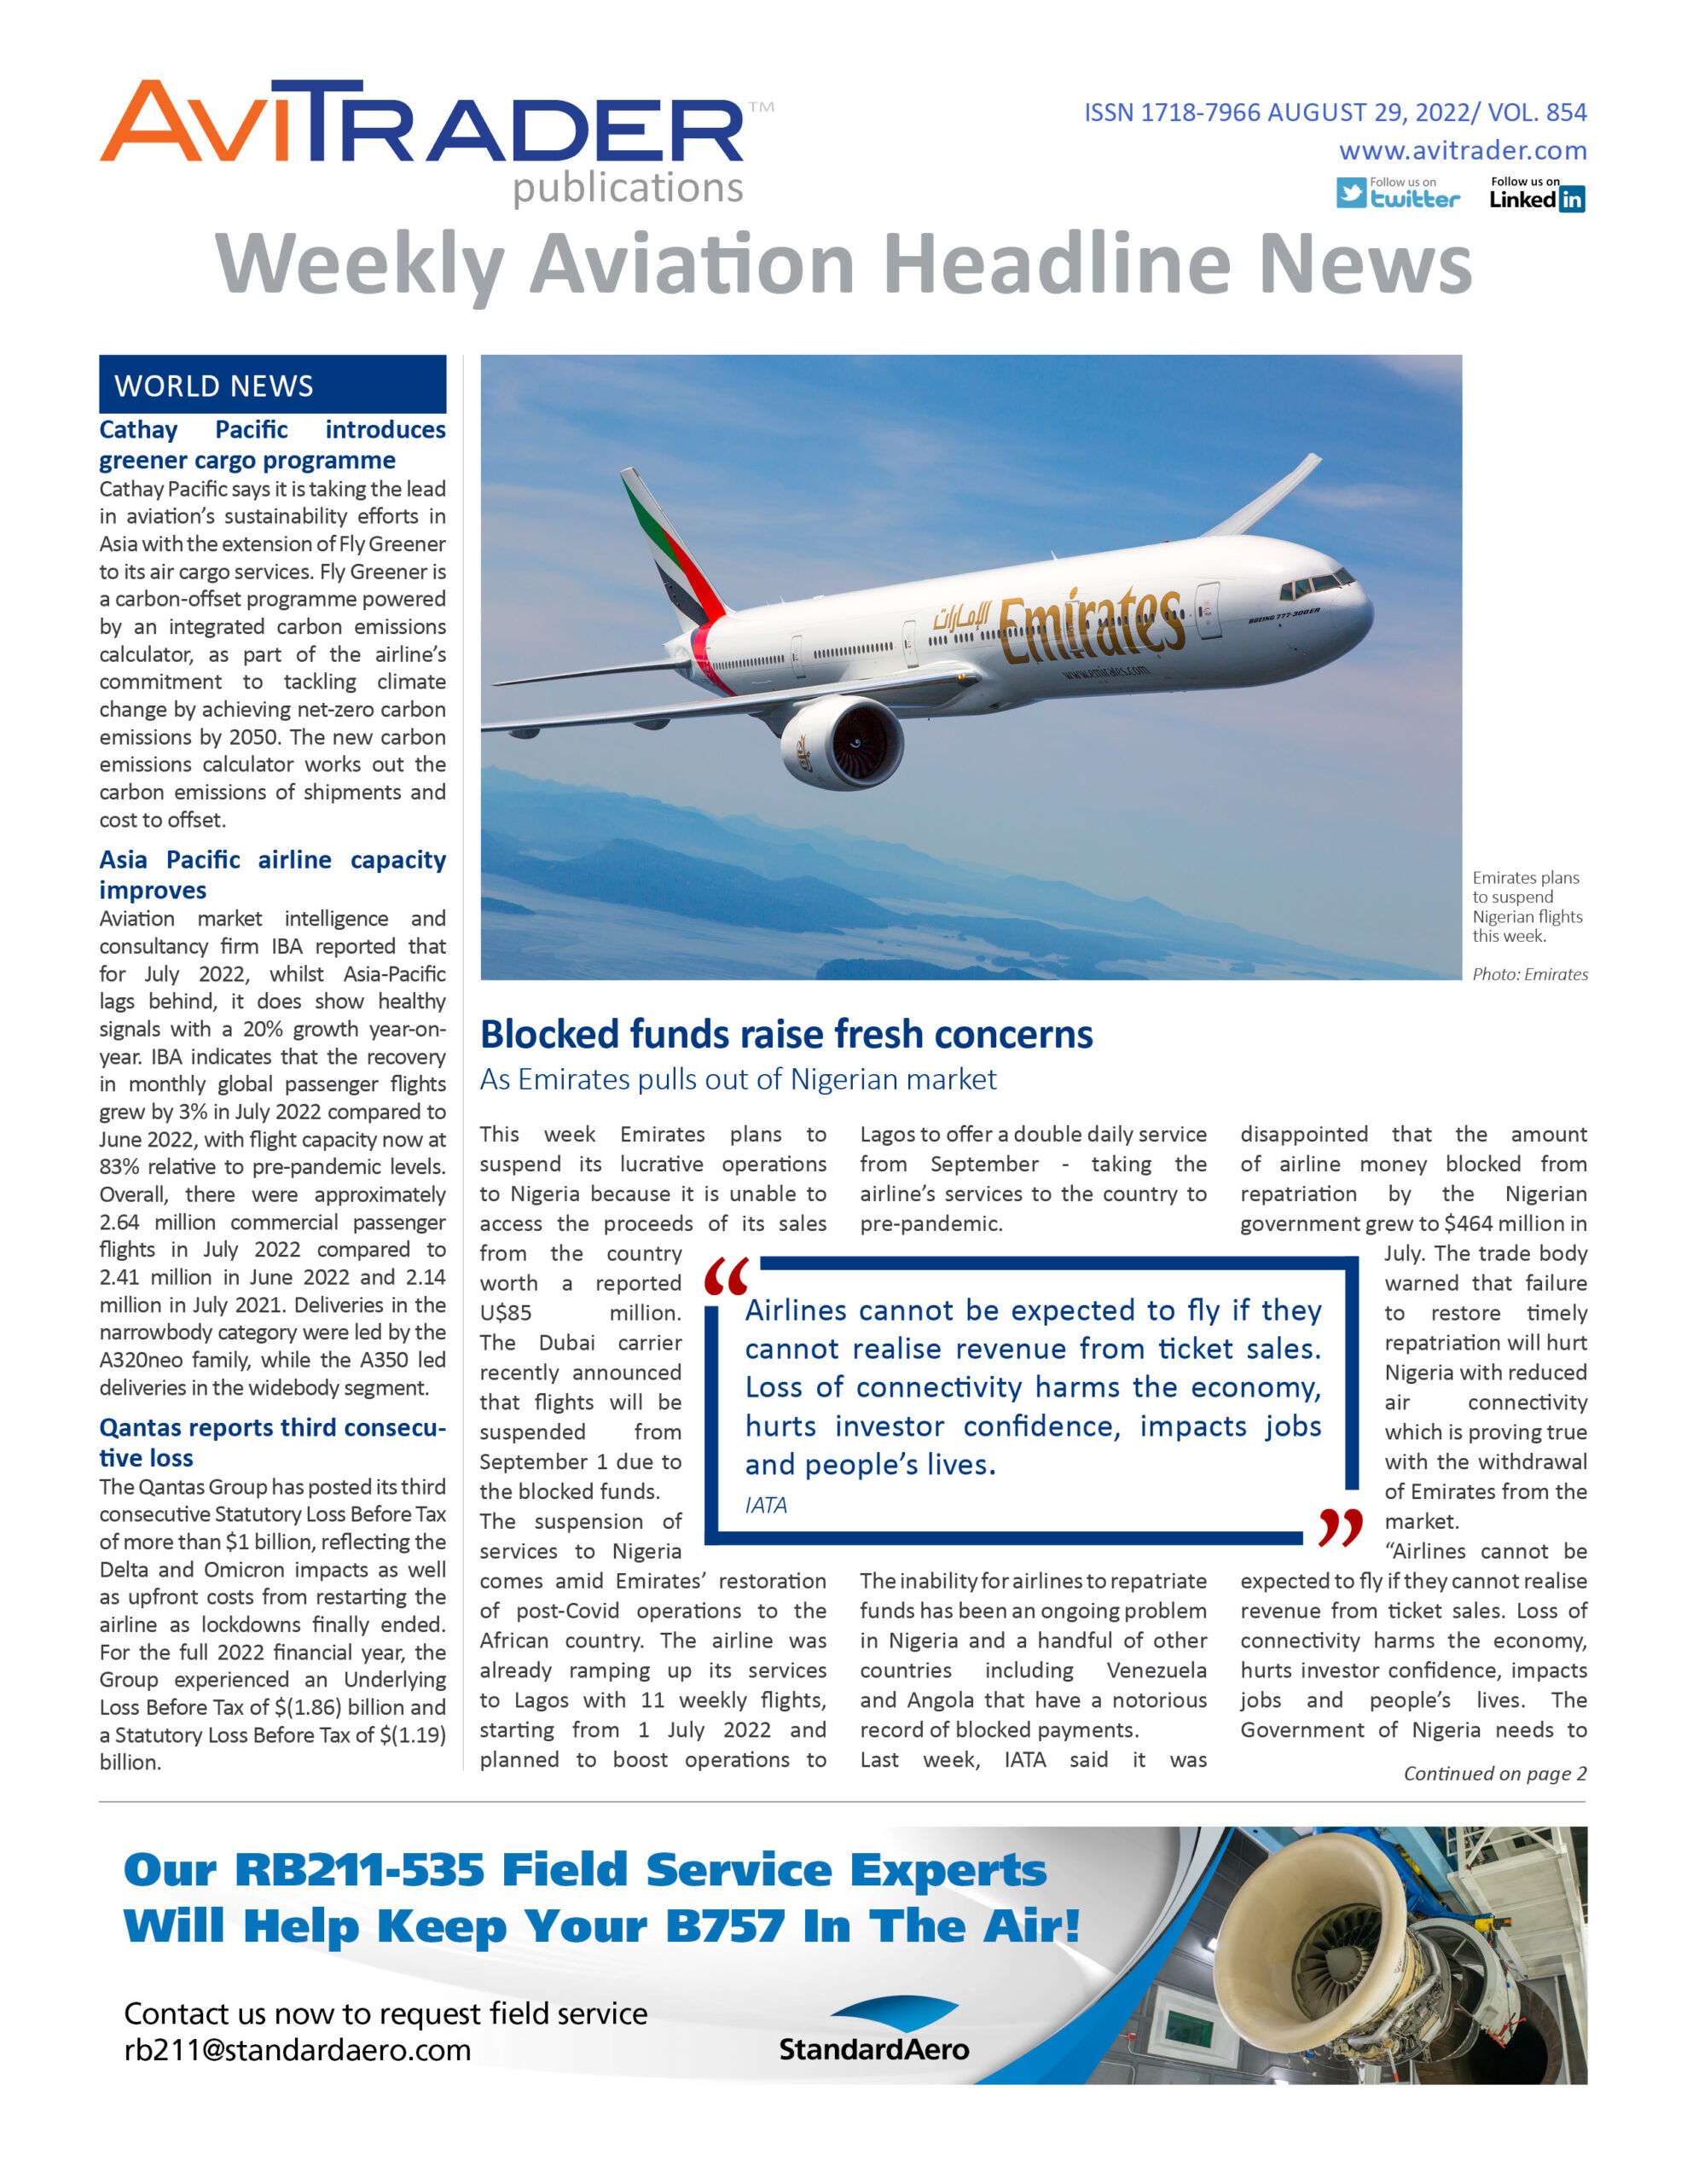 AviTrader_Weekly_Headline_News_Cover_2022-08-29